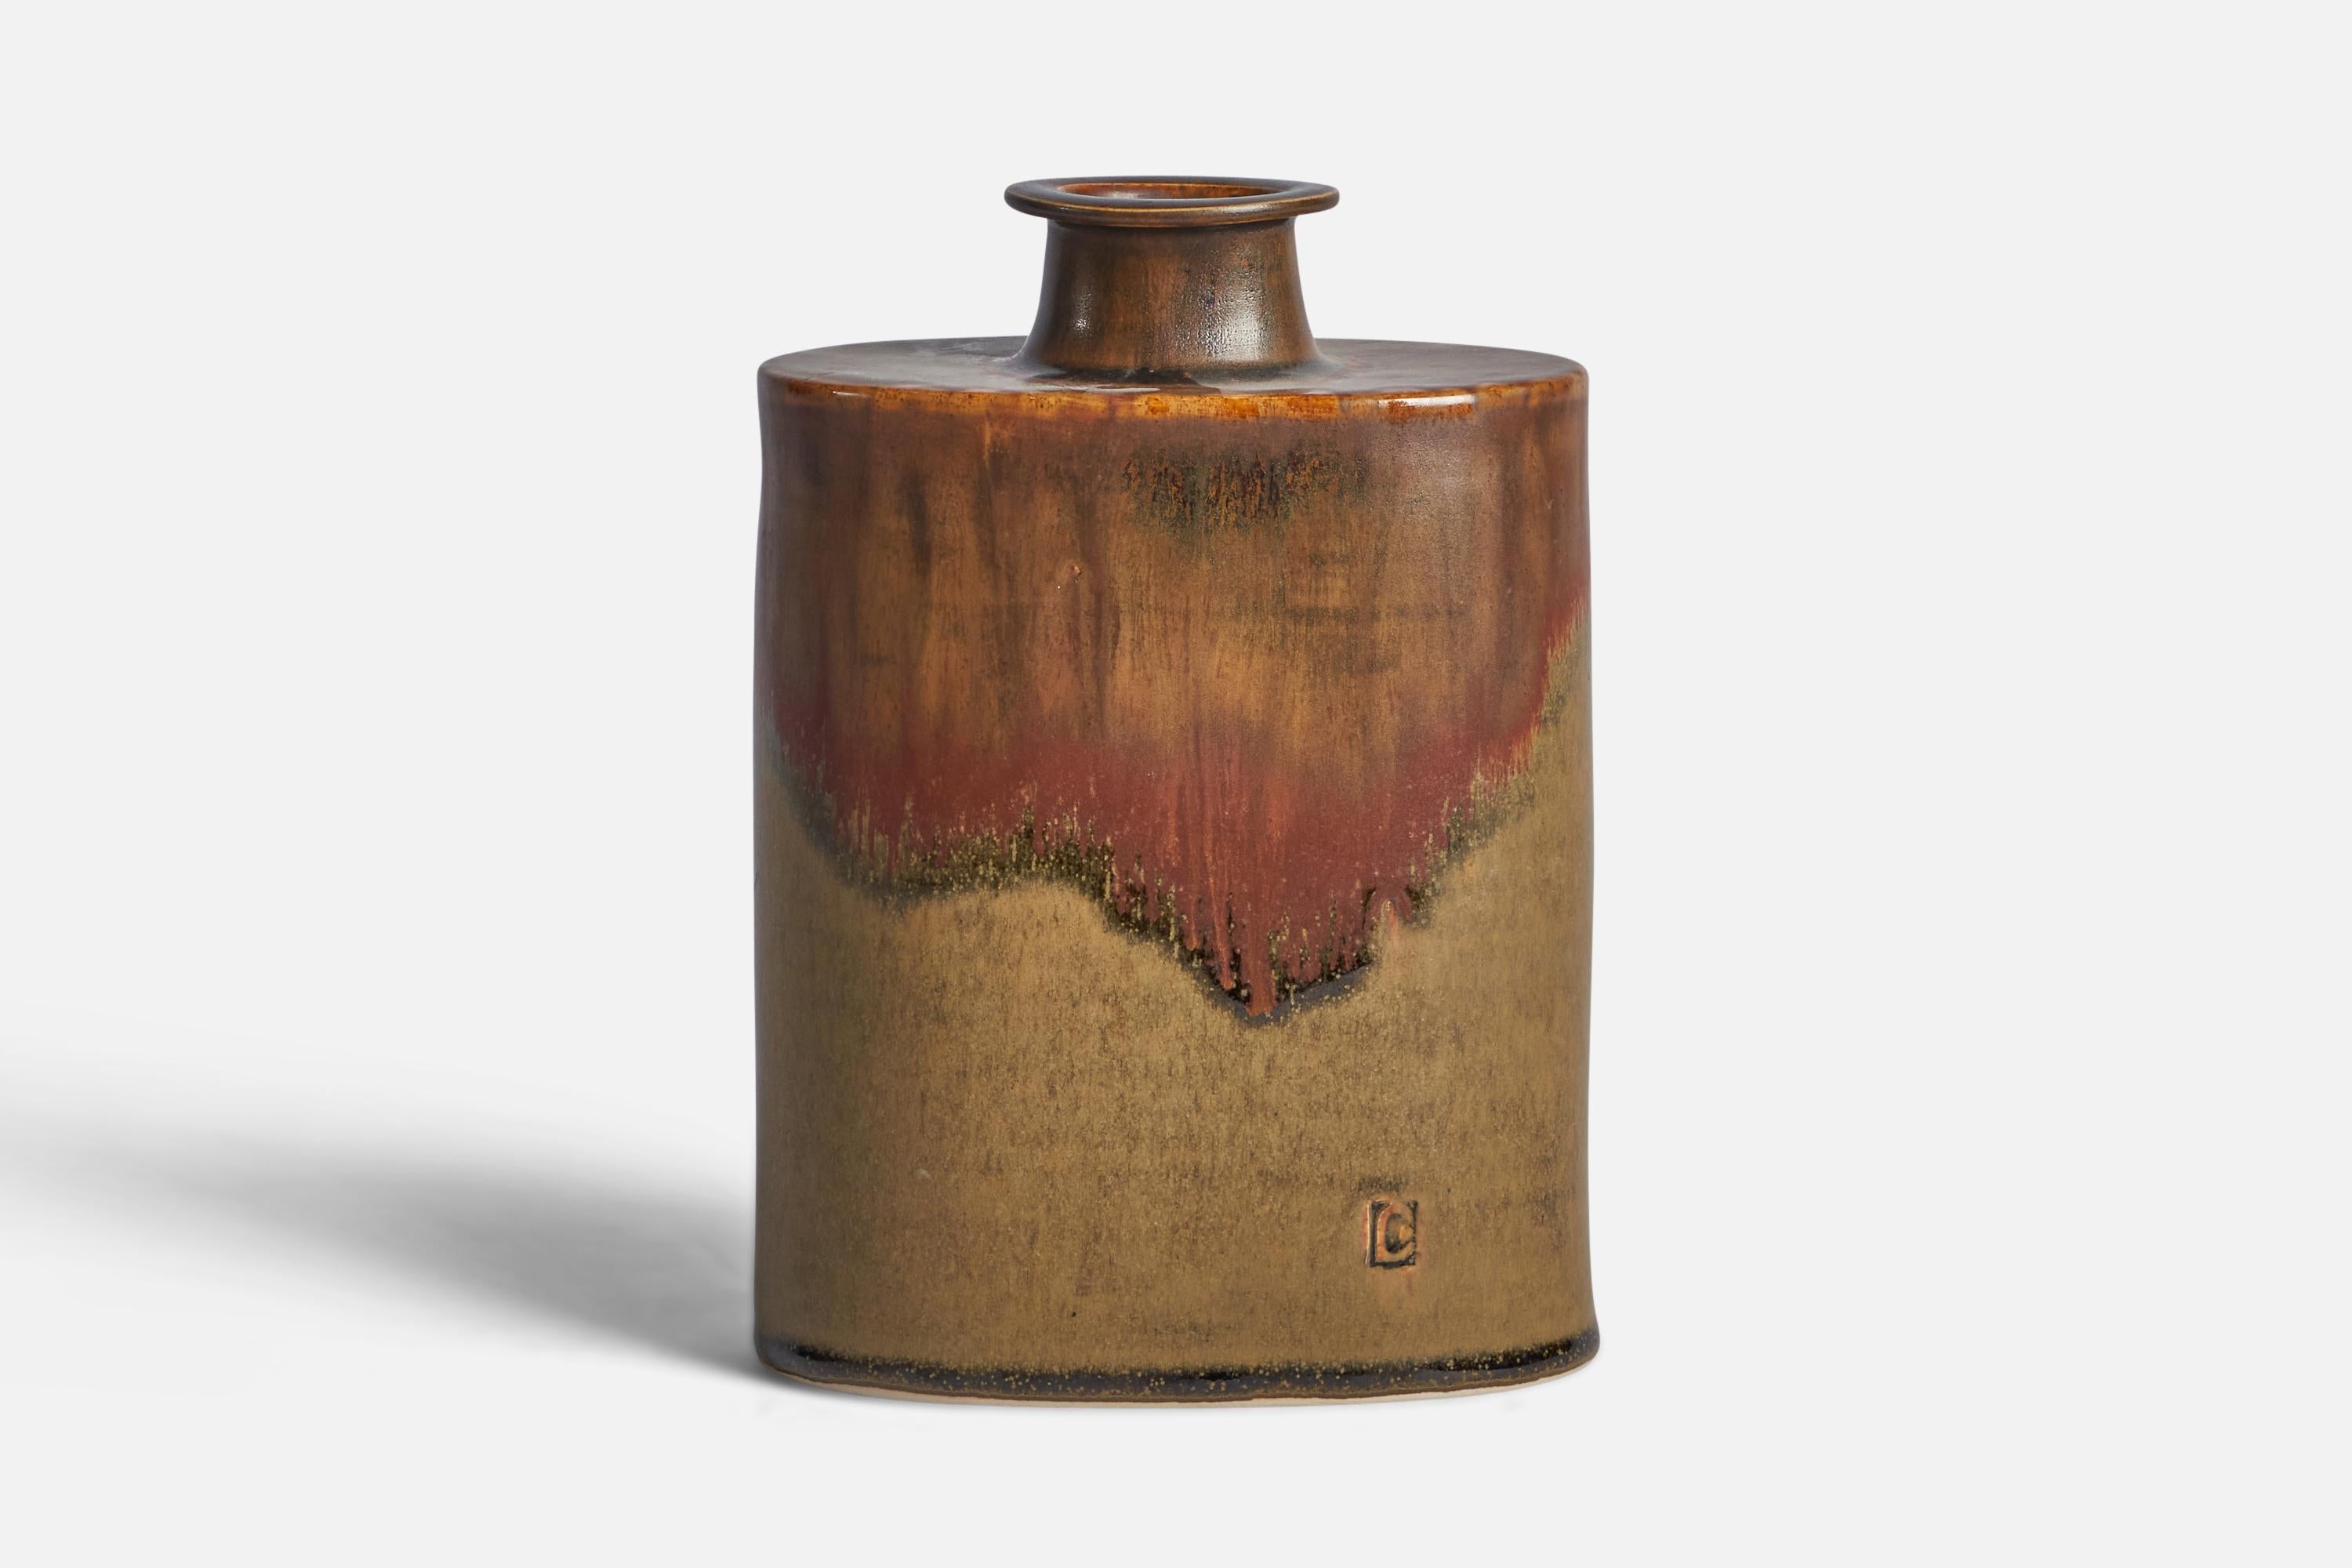 A red and beige-glazed stoneware vase designed and produced by Larsdrejare, Laholm, Sweden, c. 1960s.